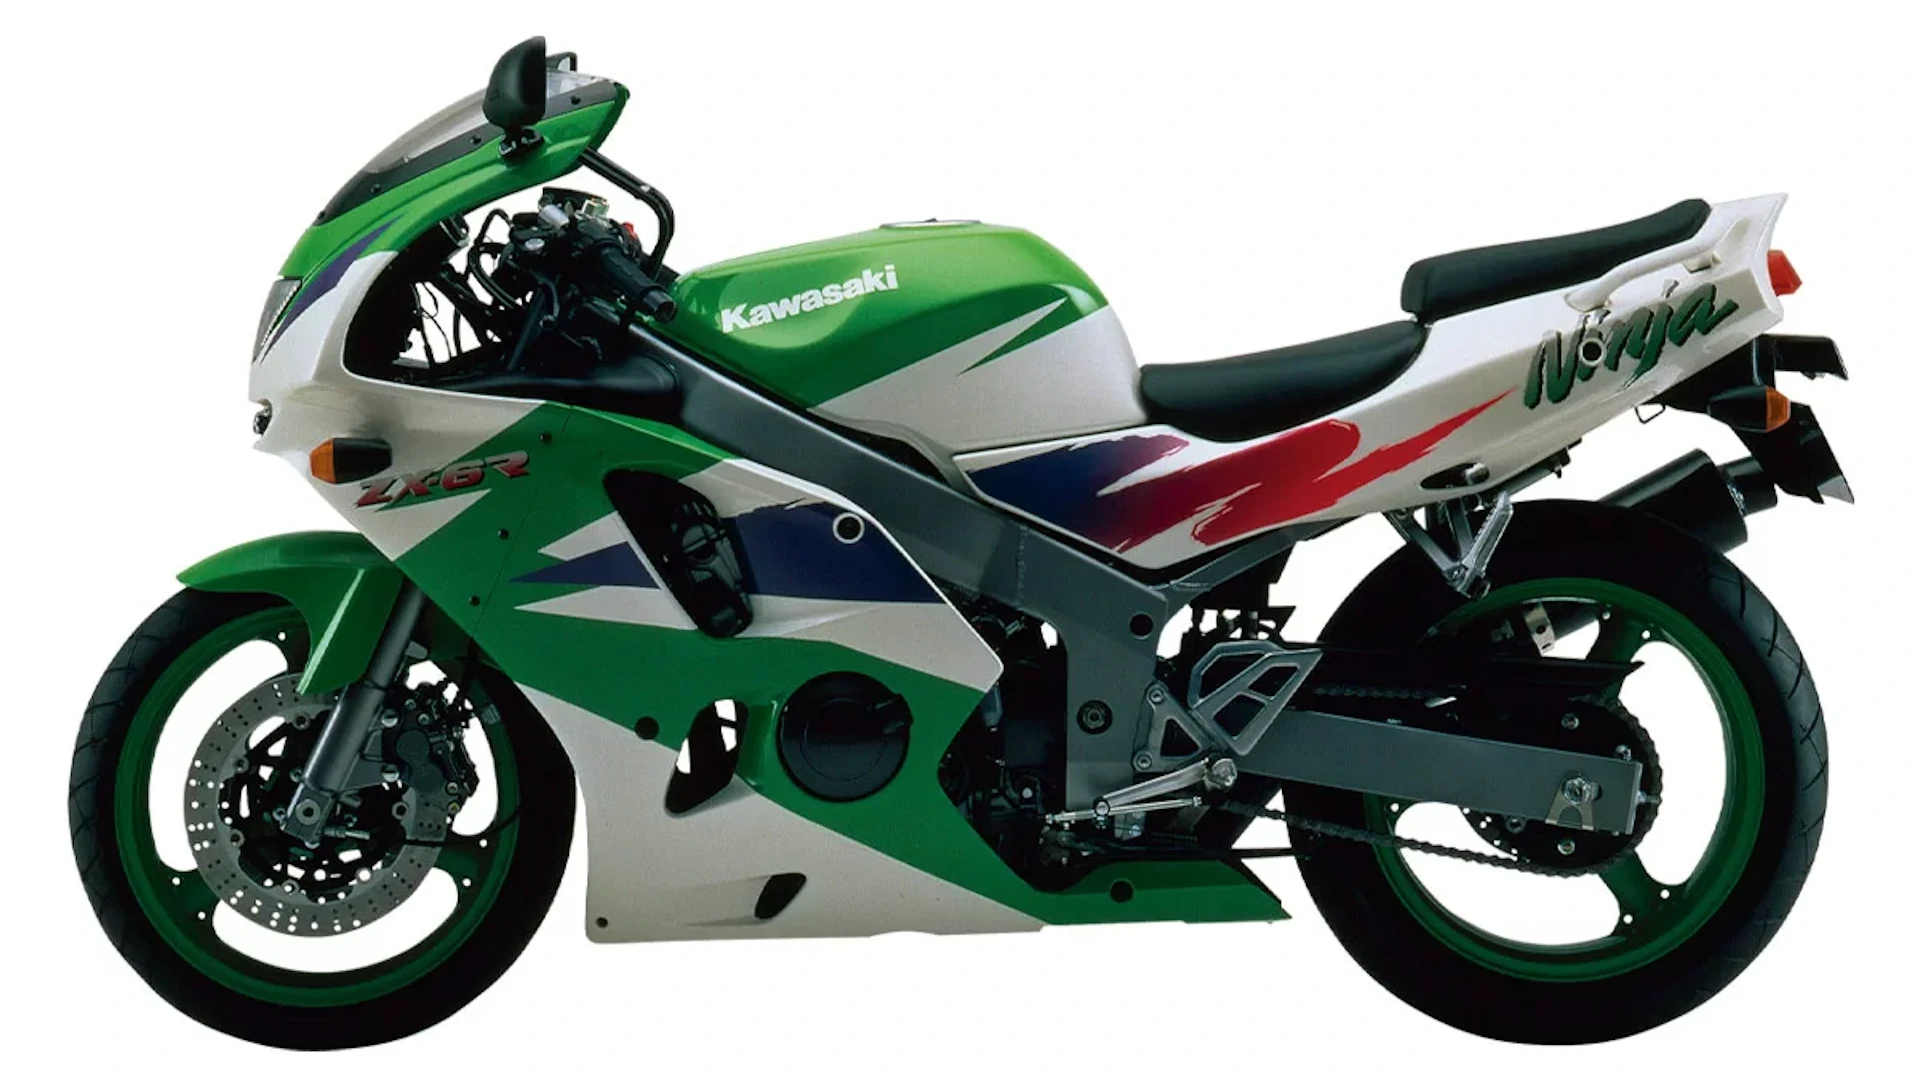 Moto del día: Kawasaki ZX-6R Ninja (F1)